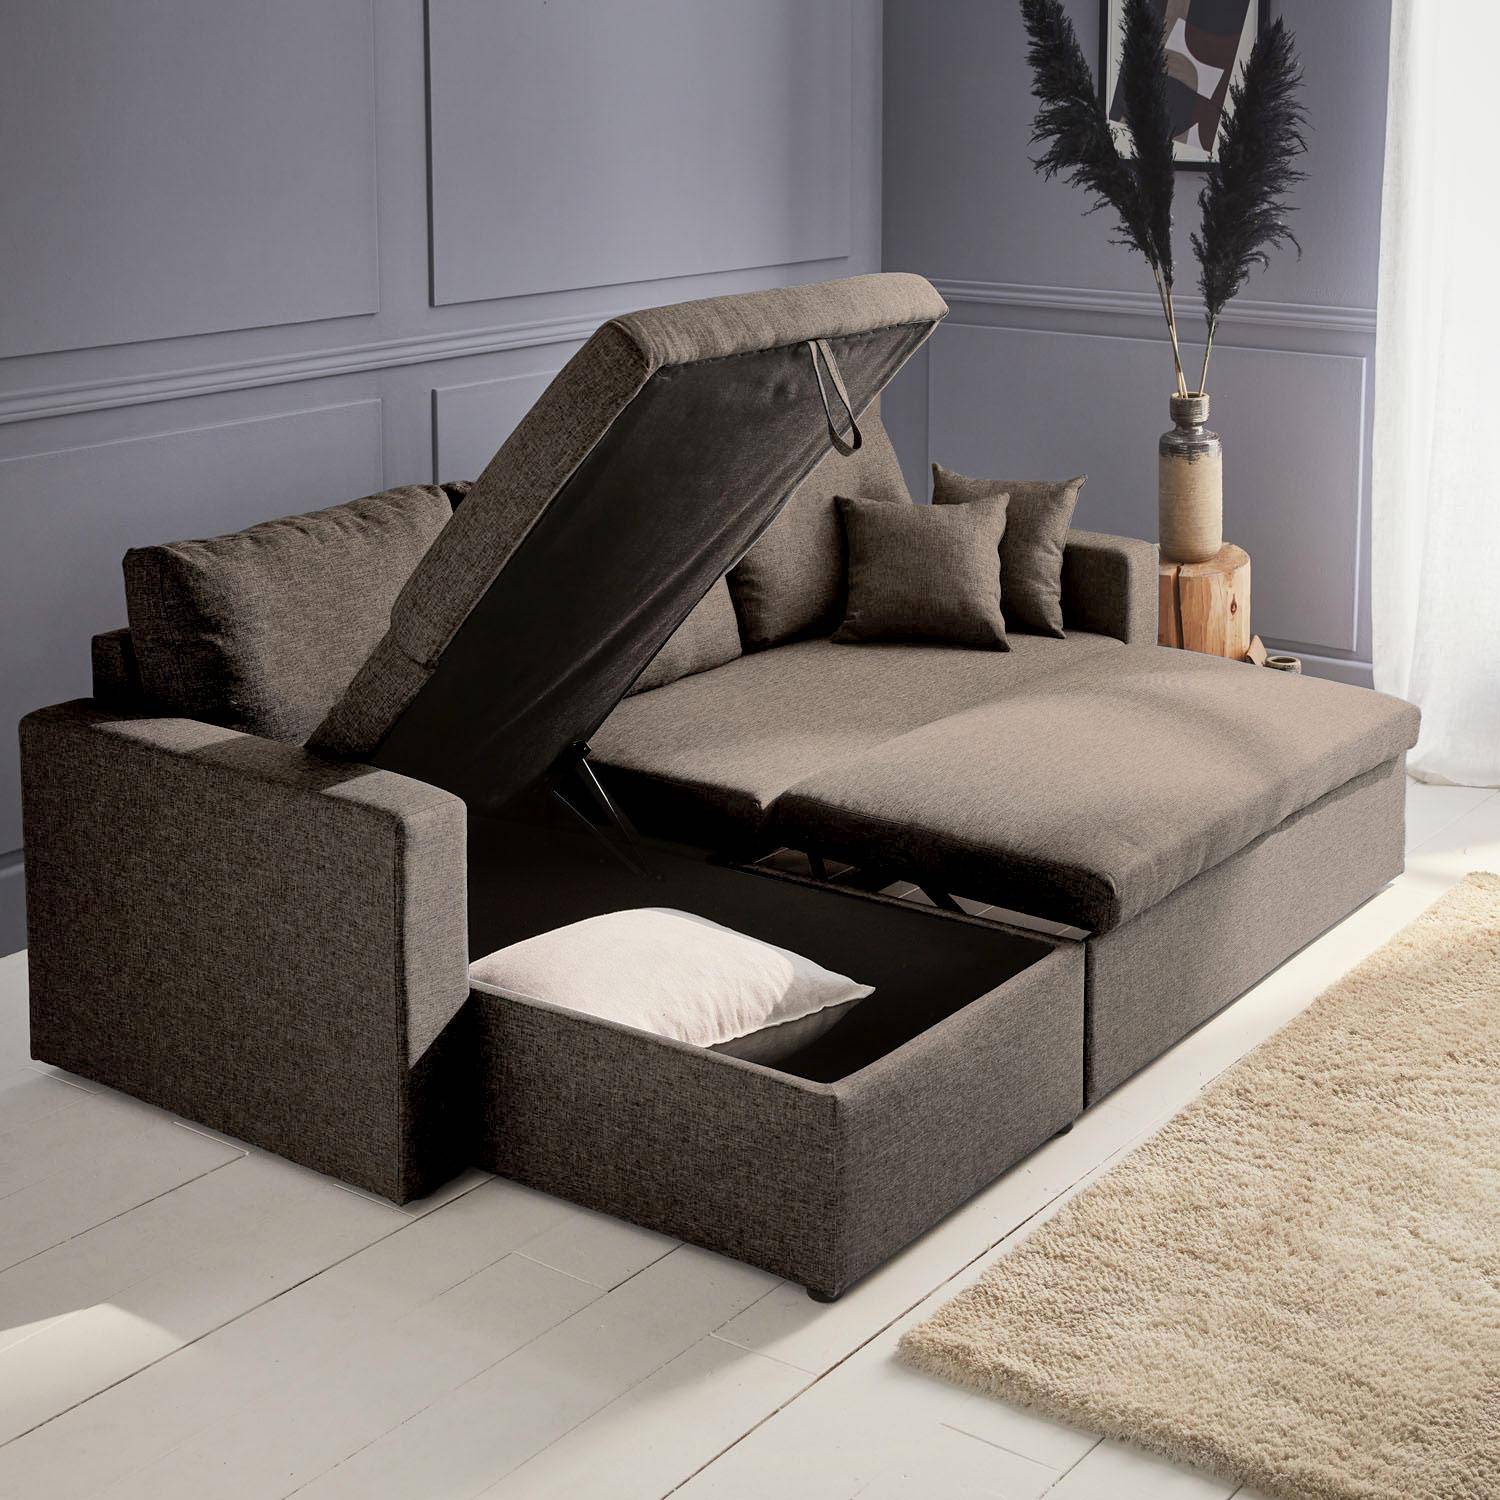 3-seater reversible brown corner sofa bed with storage box, brown, L219xD81xH68cm, IDA Photo4